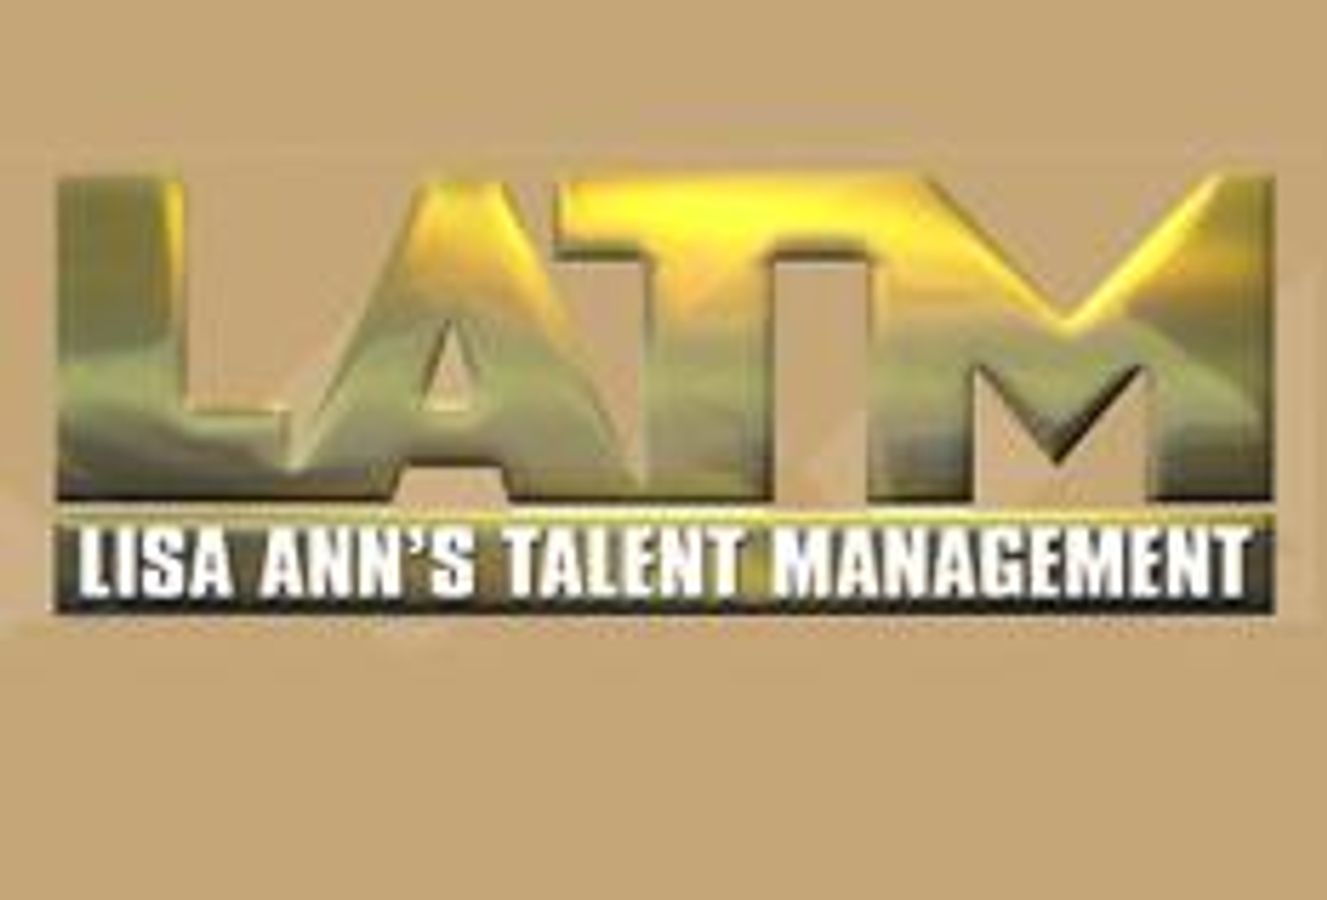 Lisa Ann's Talent Management